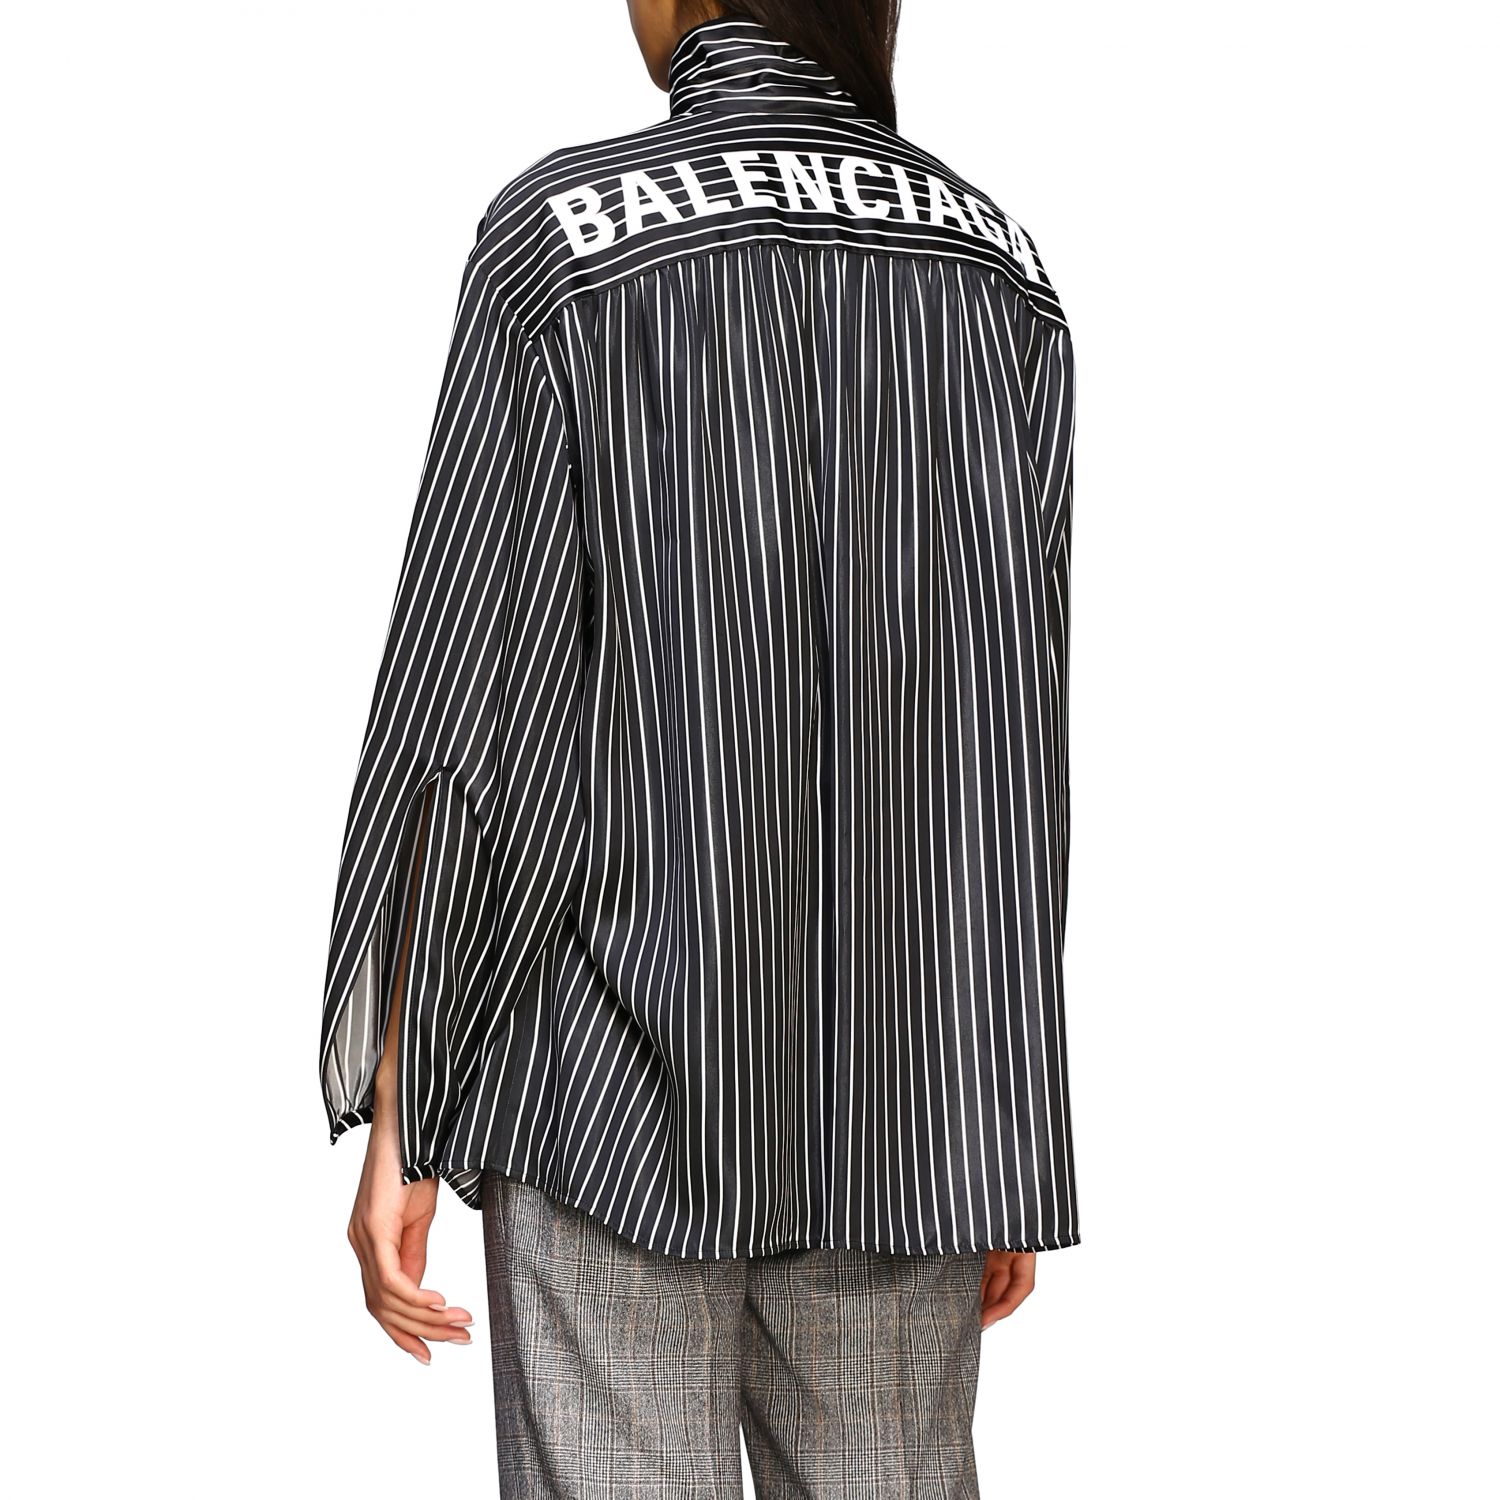 balenciaga striped shirt